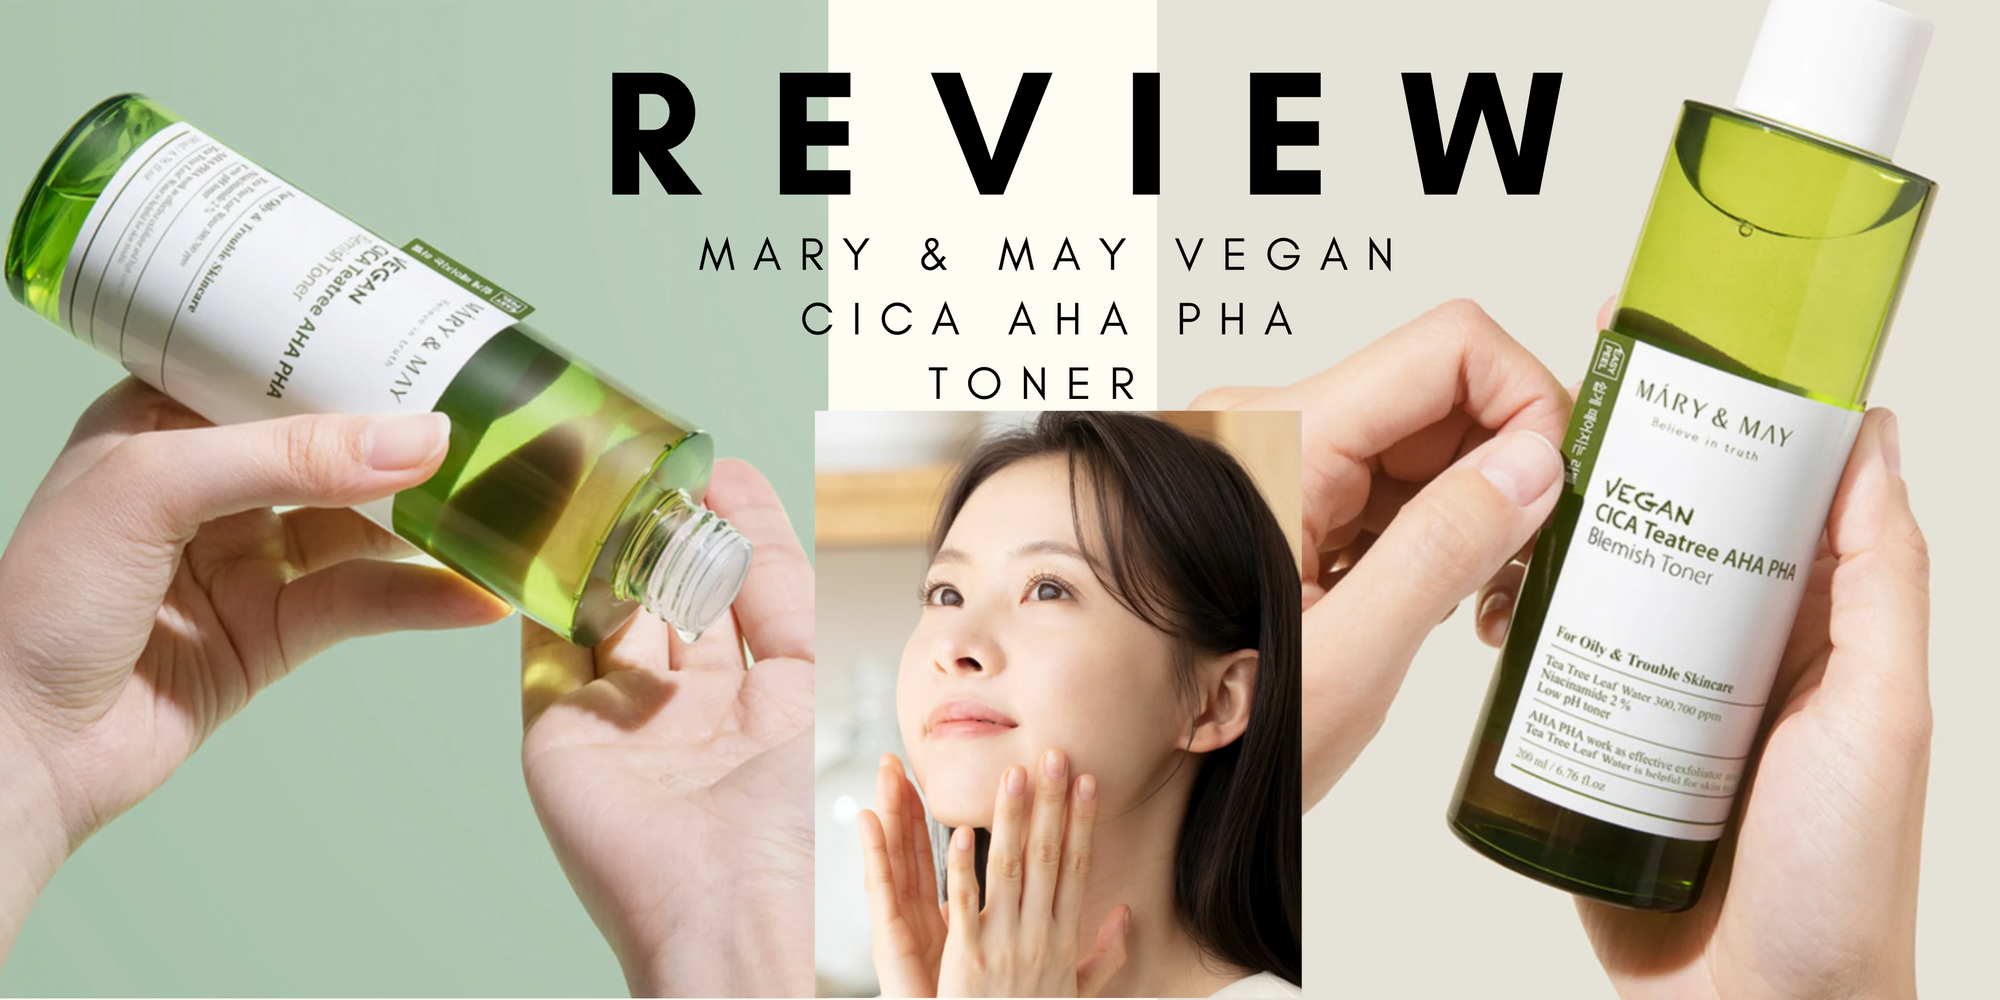 Mary & May Vegan Cica AHA PHA Toner Review